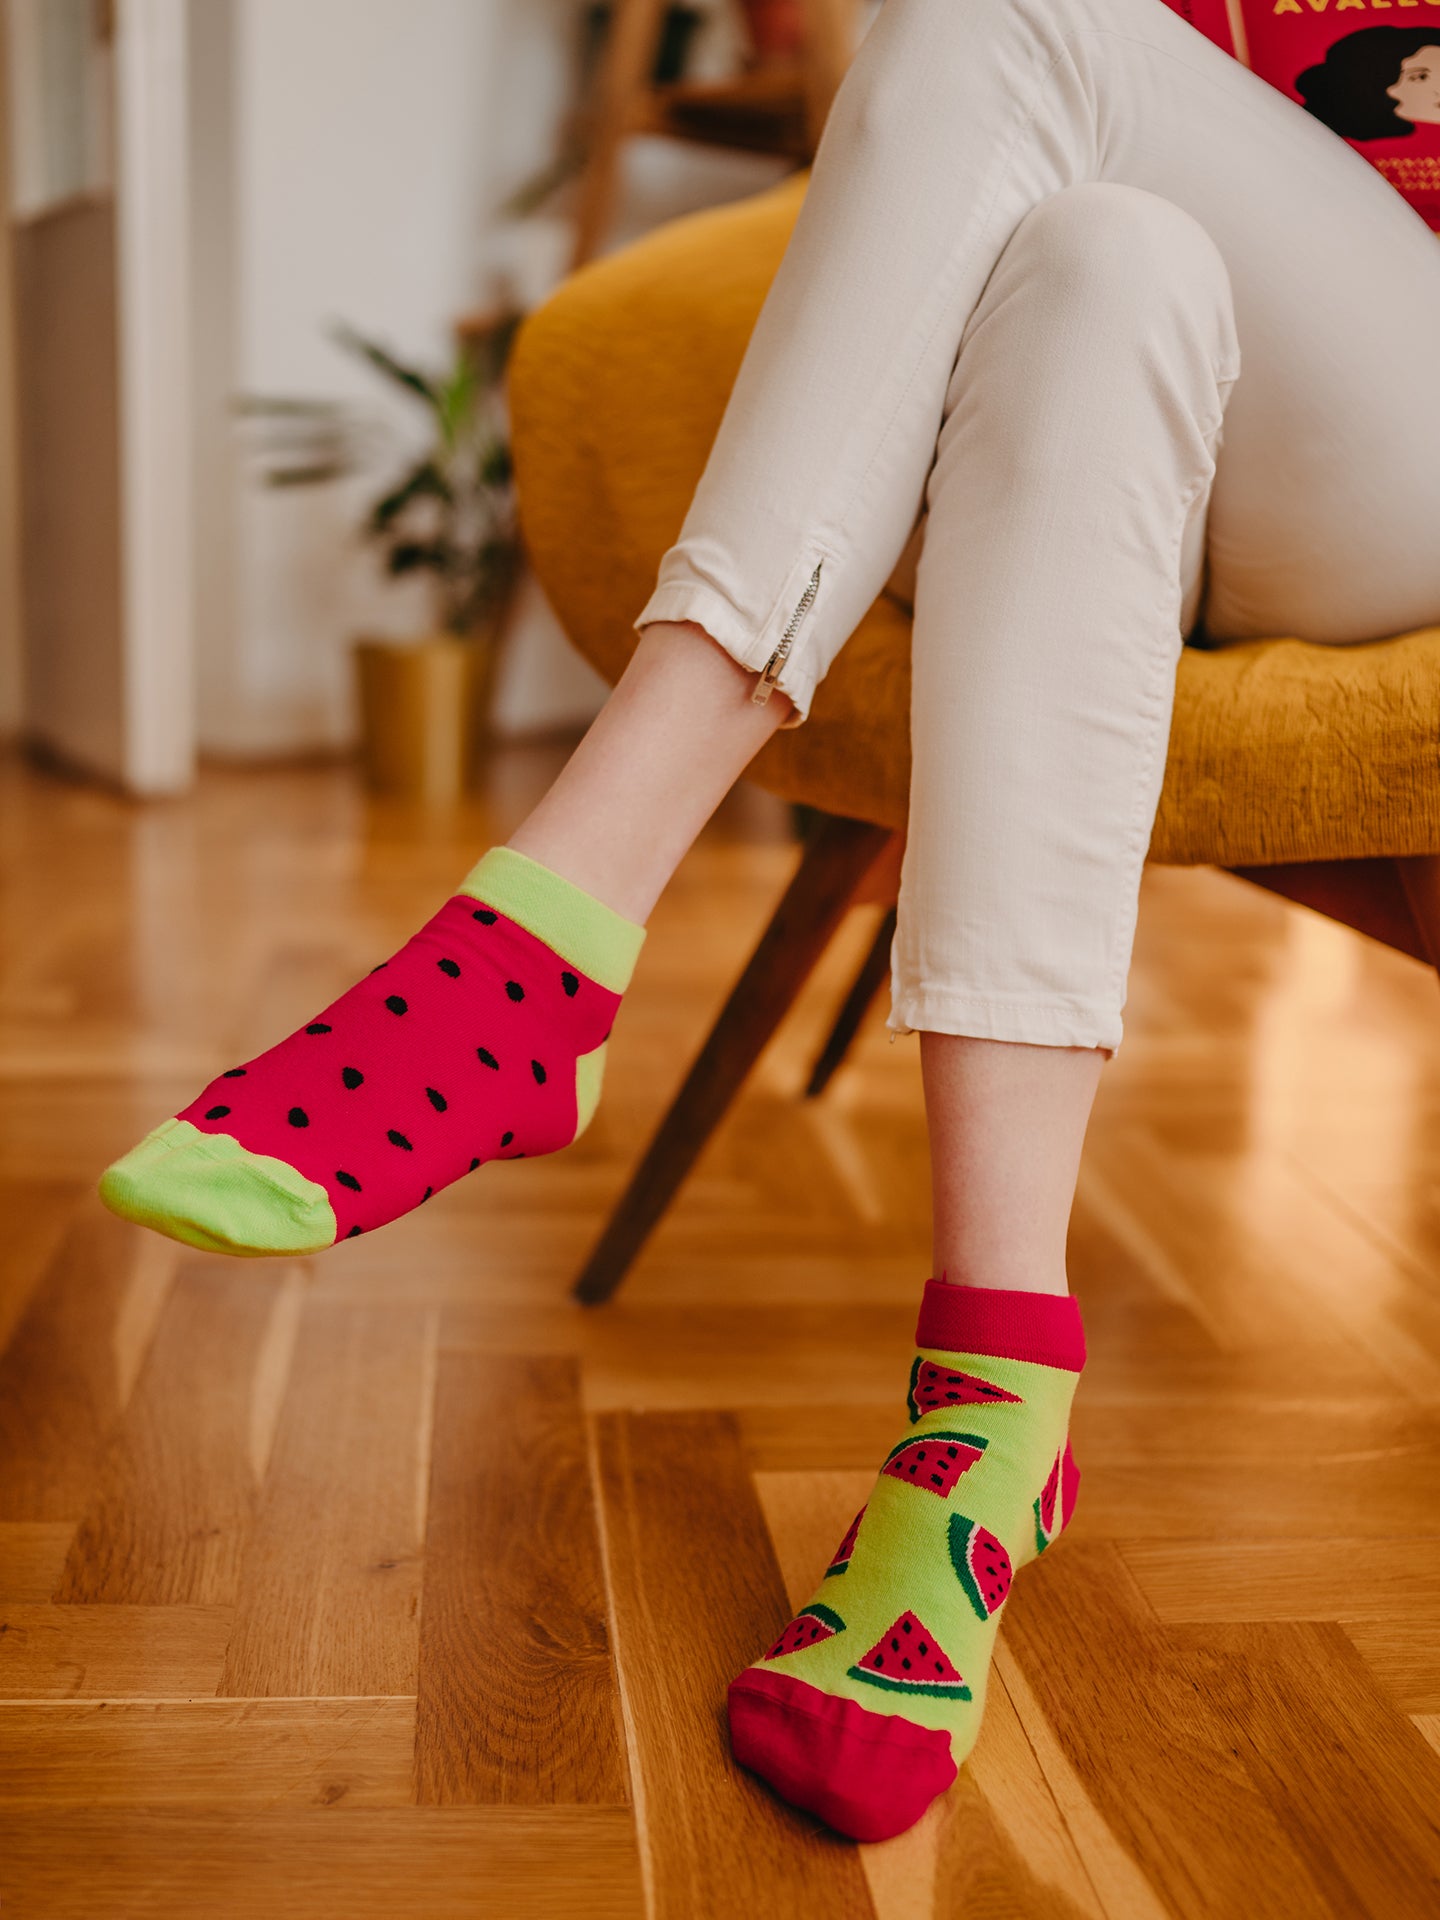 Ankle Socks Watermelon